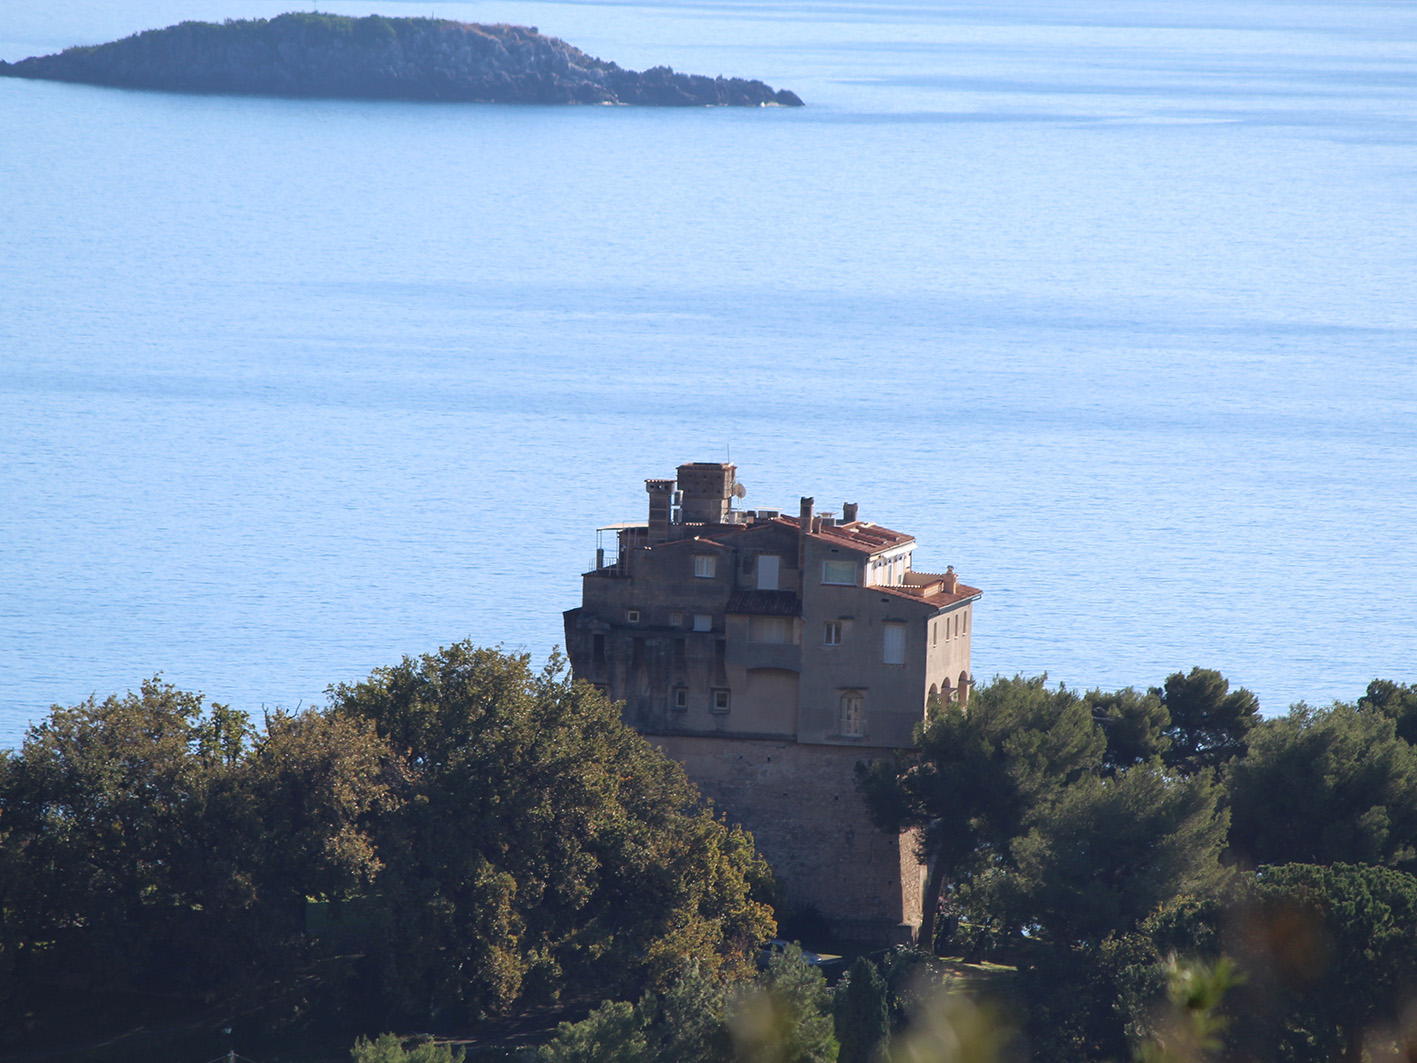 Torre costiera Santa Venere (torre, costiera) - Maratea (PZ) 